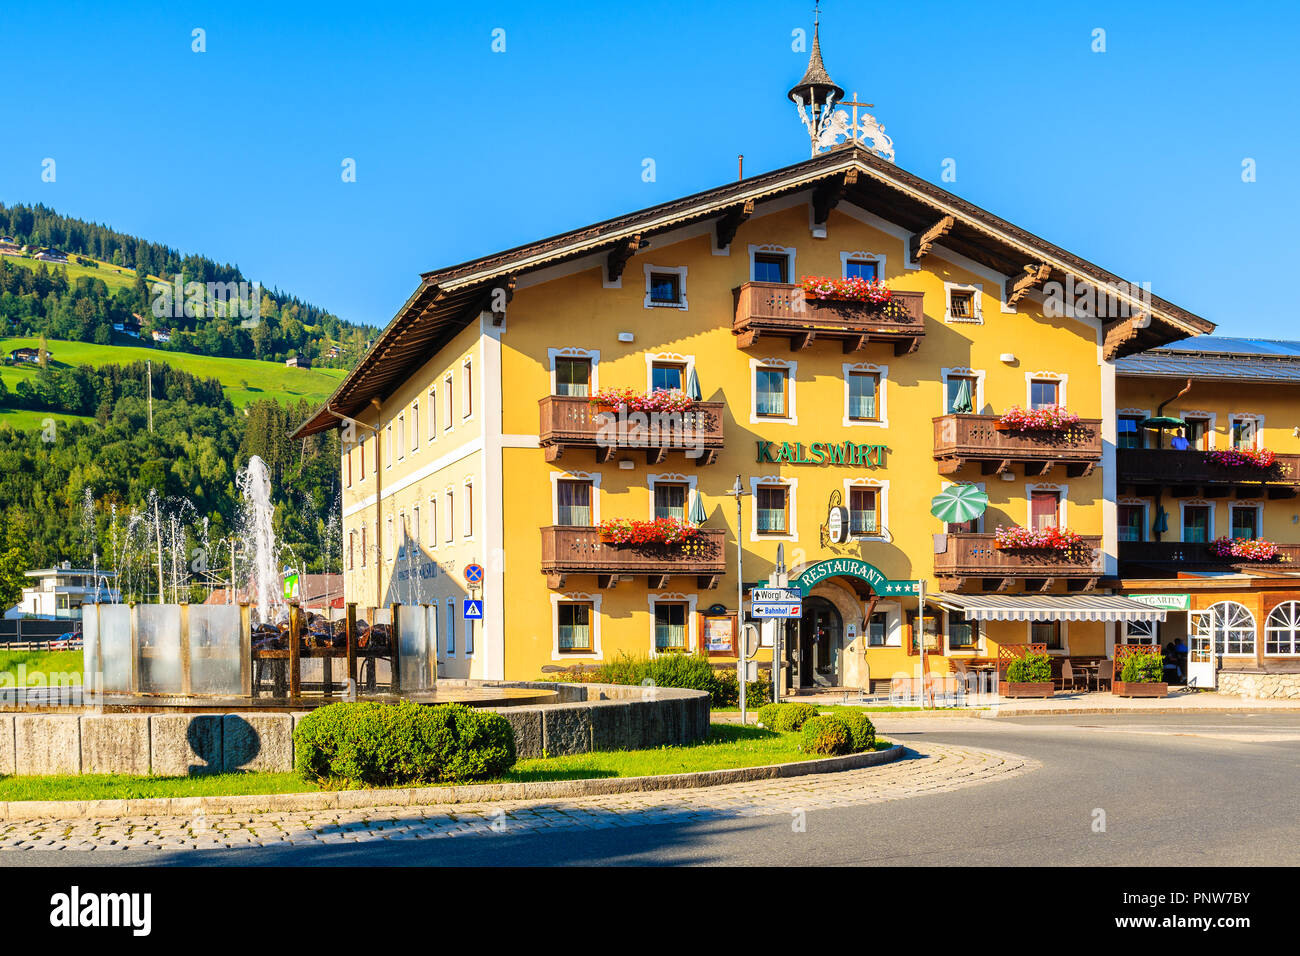 KIRCHBERG IN TIROL TOWN, AUSTRIA - JUL 30, 2018: Guesthouse on street in Kirchberg in Tirol town in summertime. It is popular Austrian winter sports d Stock Photo